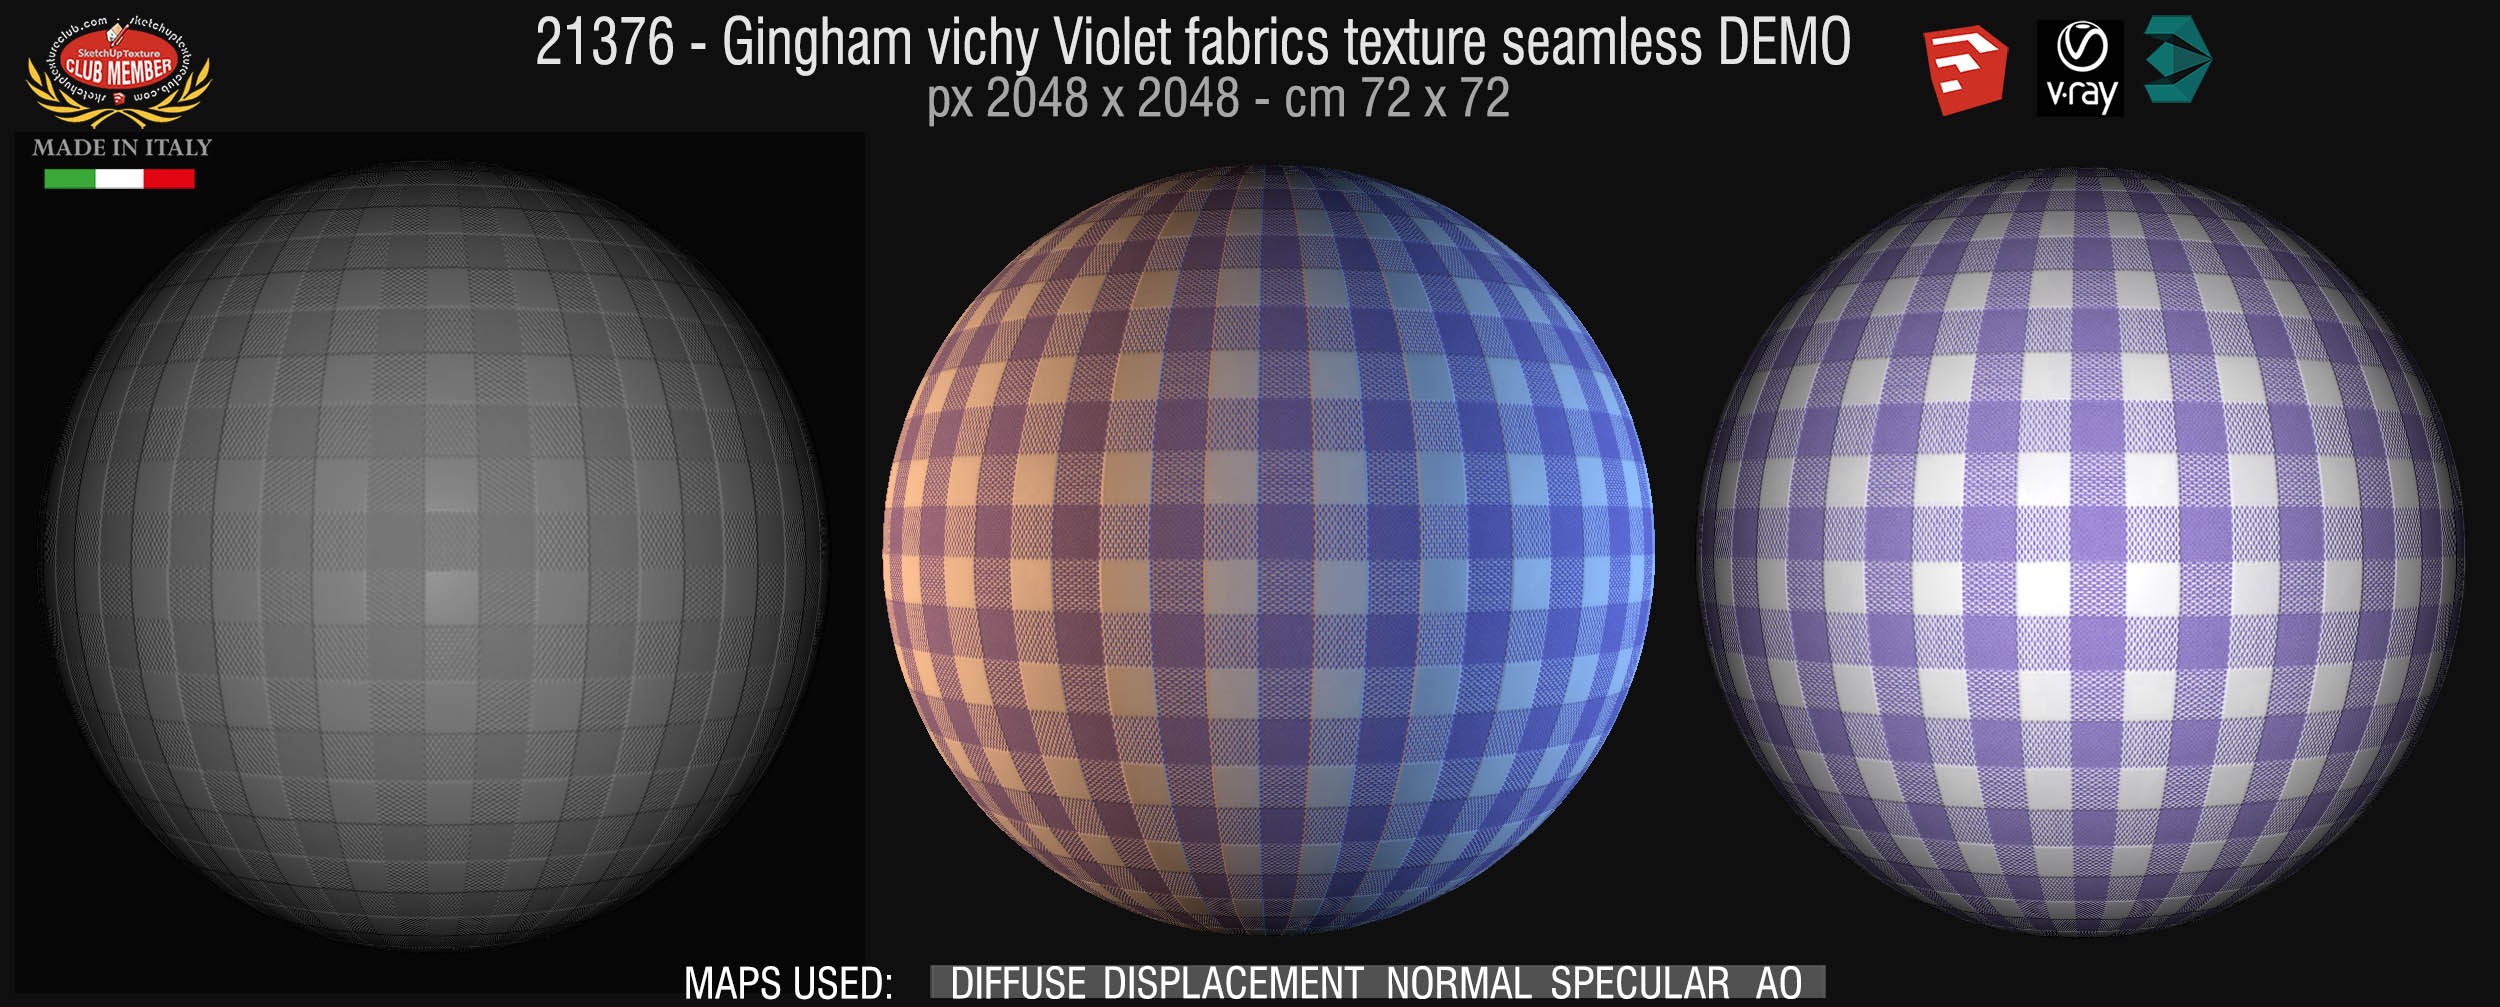 21376 6 Gingham vichy Violet fabrics texture + maps DEMO